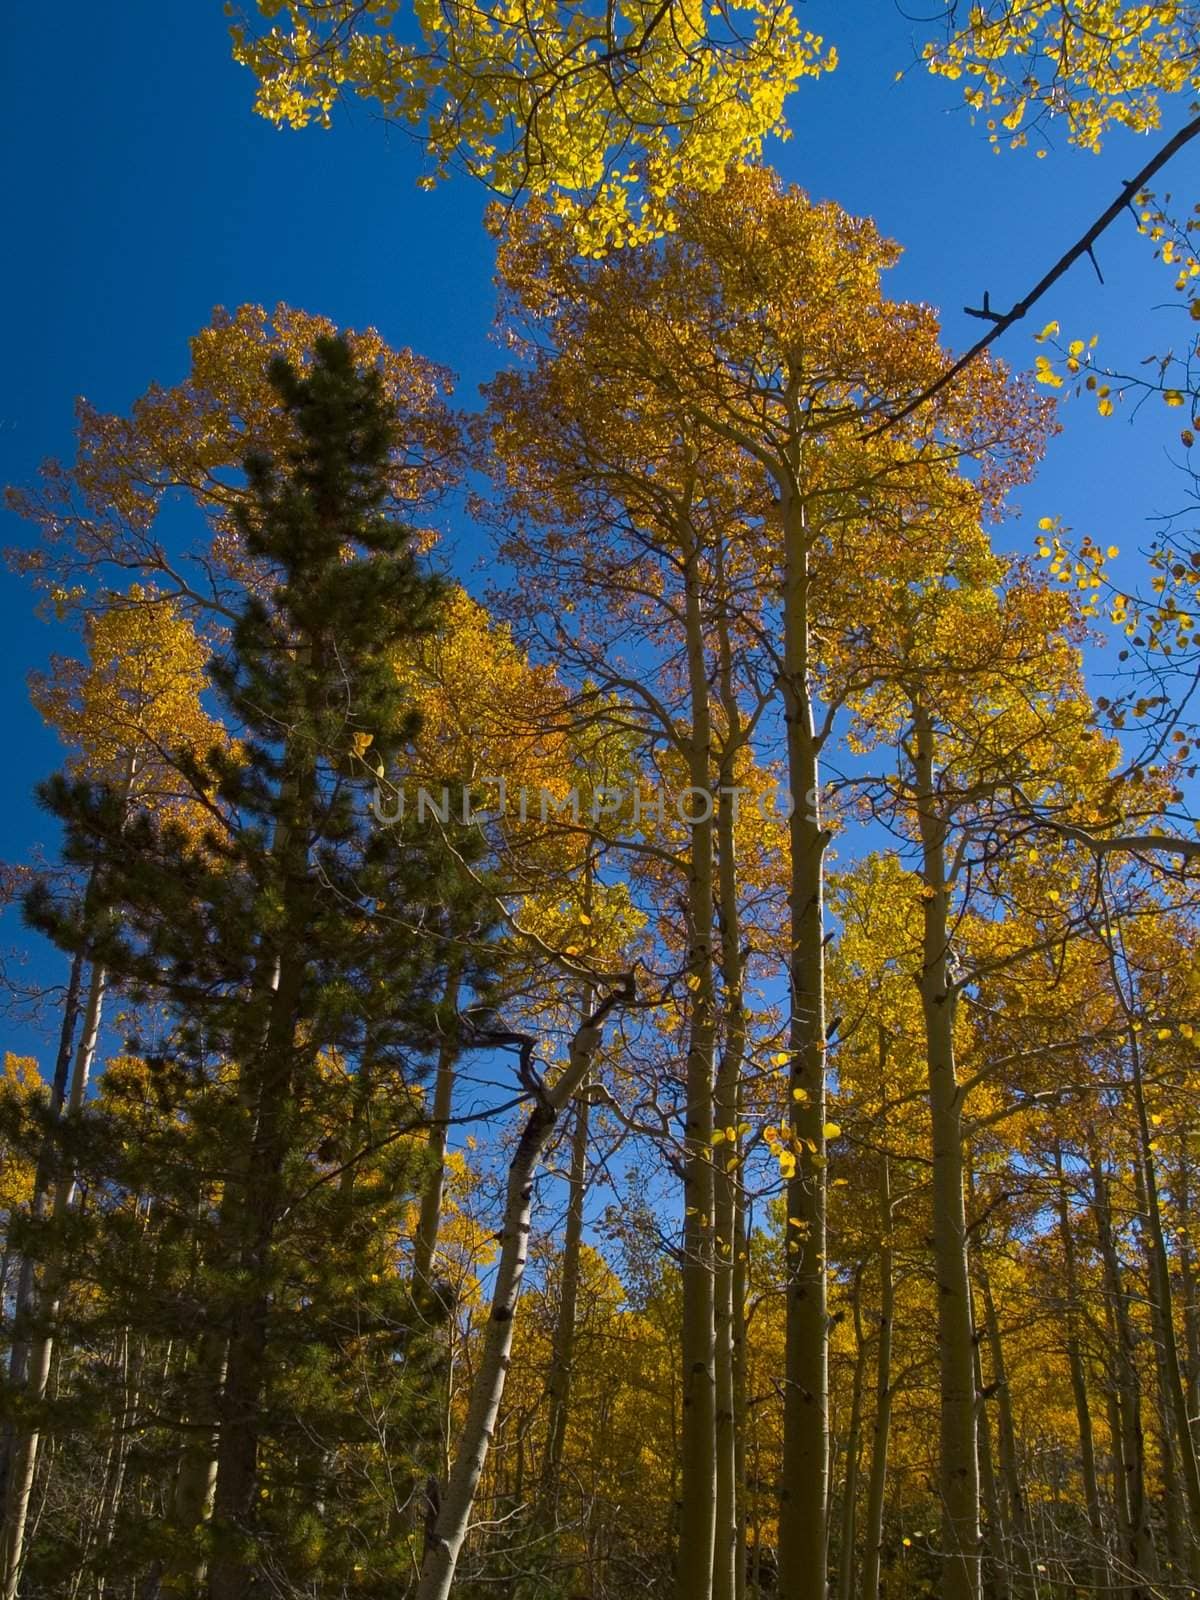 Woods in Autumn by CalamityJohn